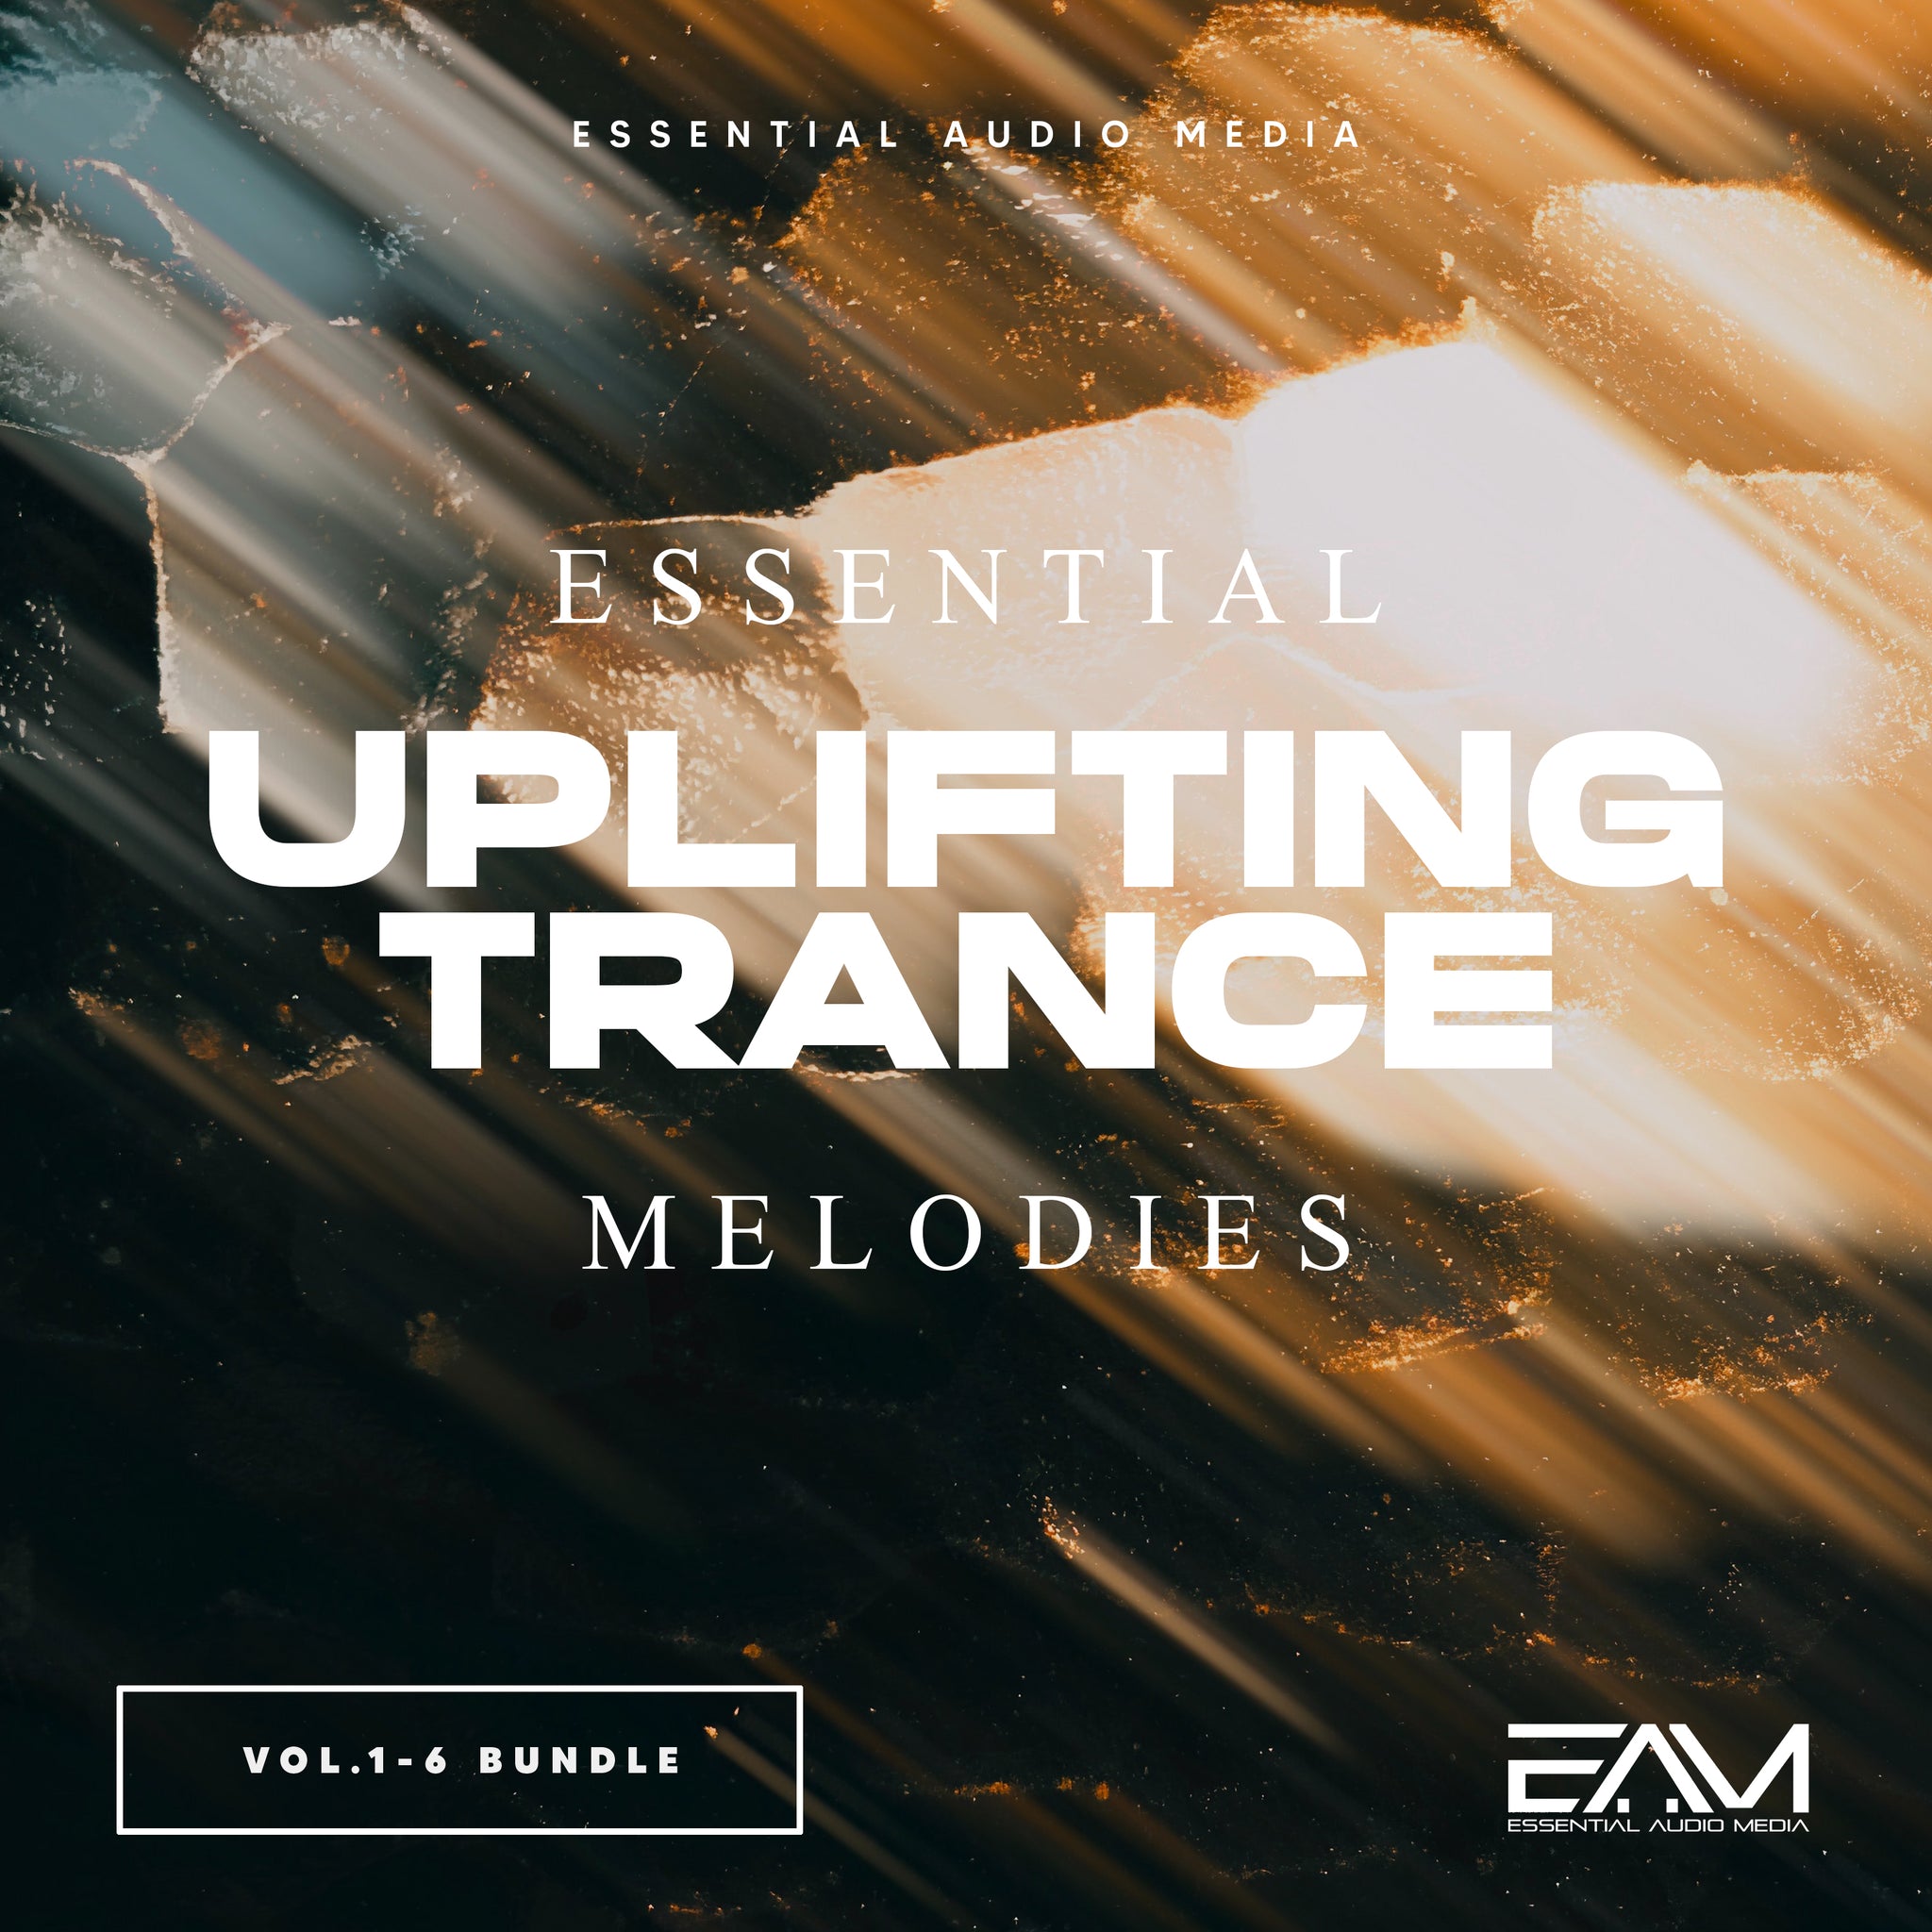 Essential Uplifting Trance Melodies Vol.1-6 Bundle